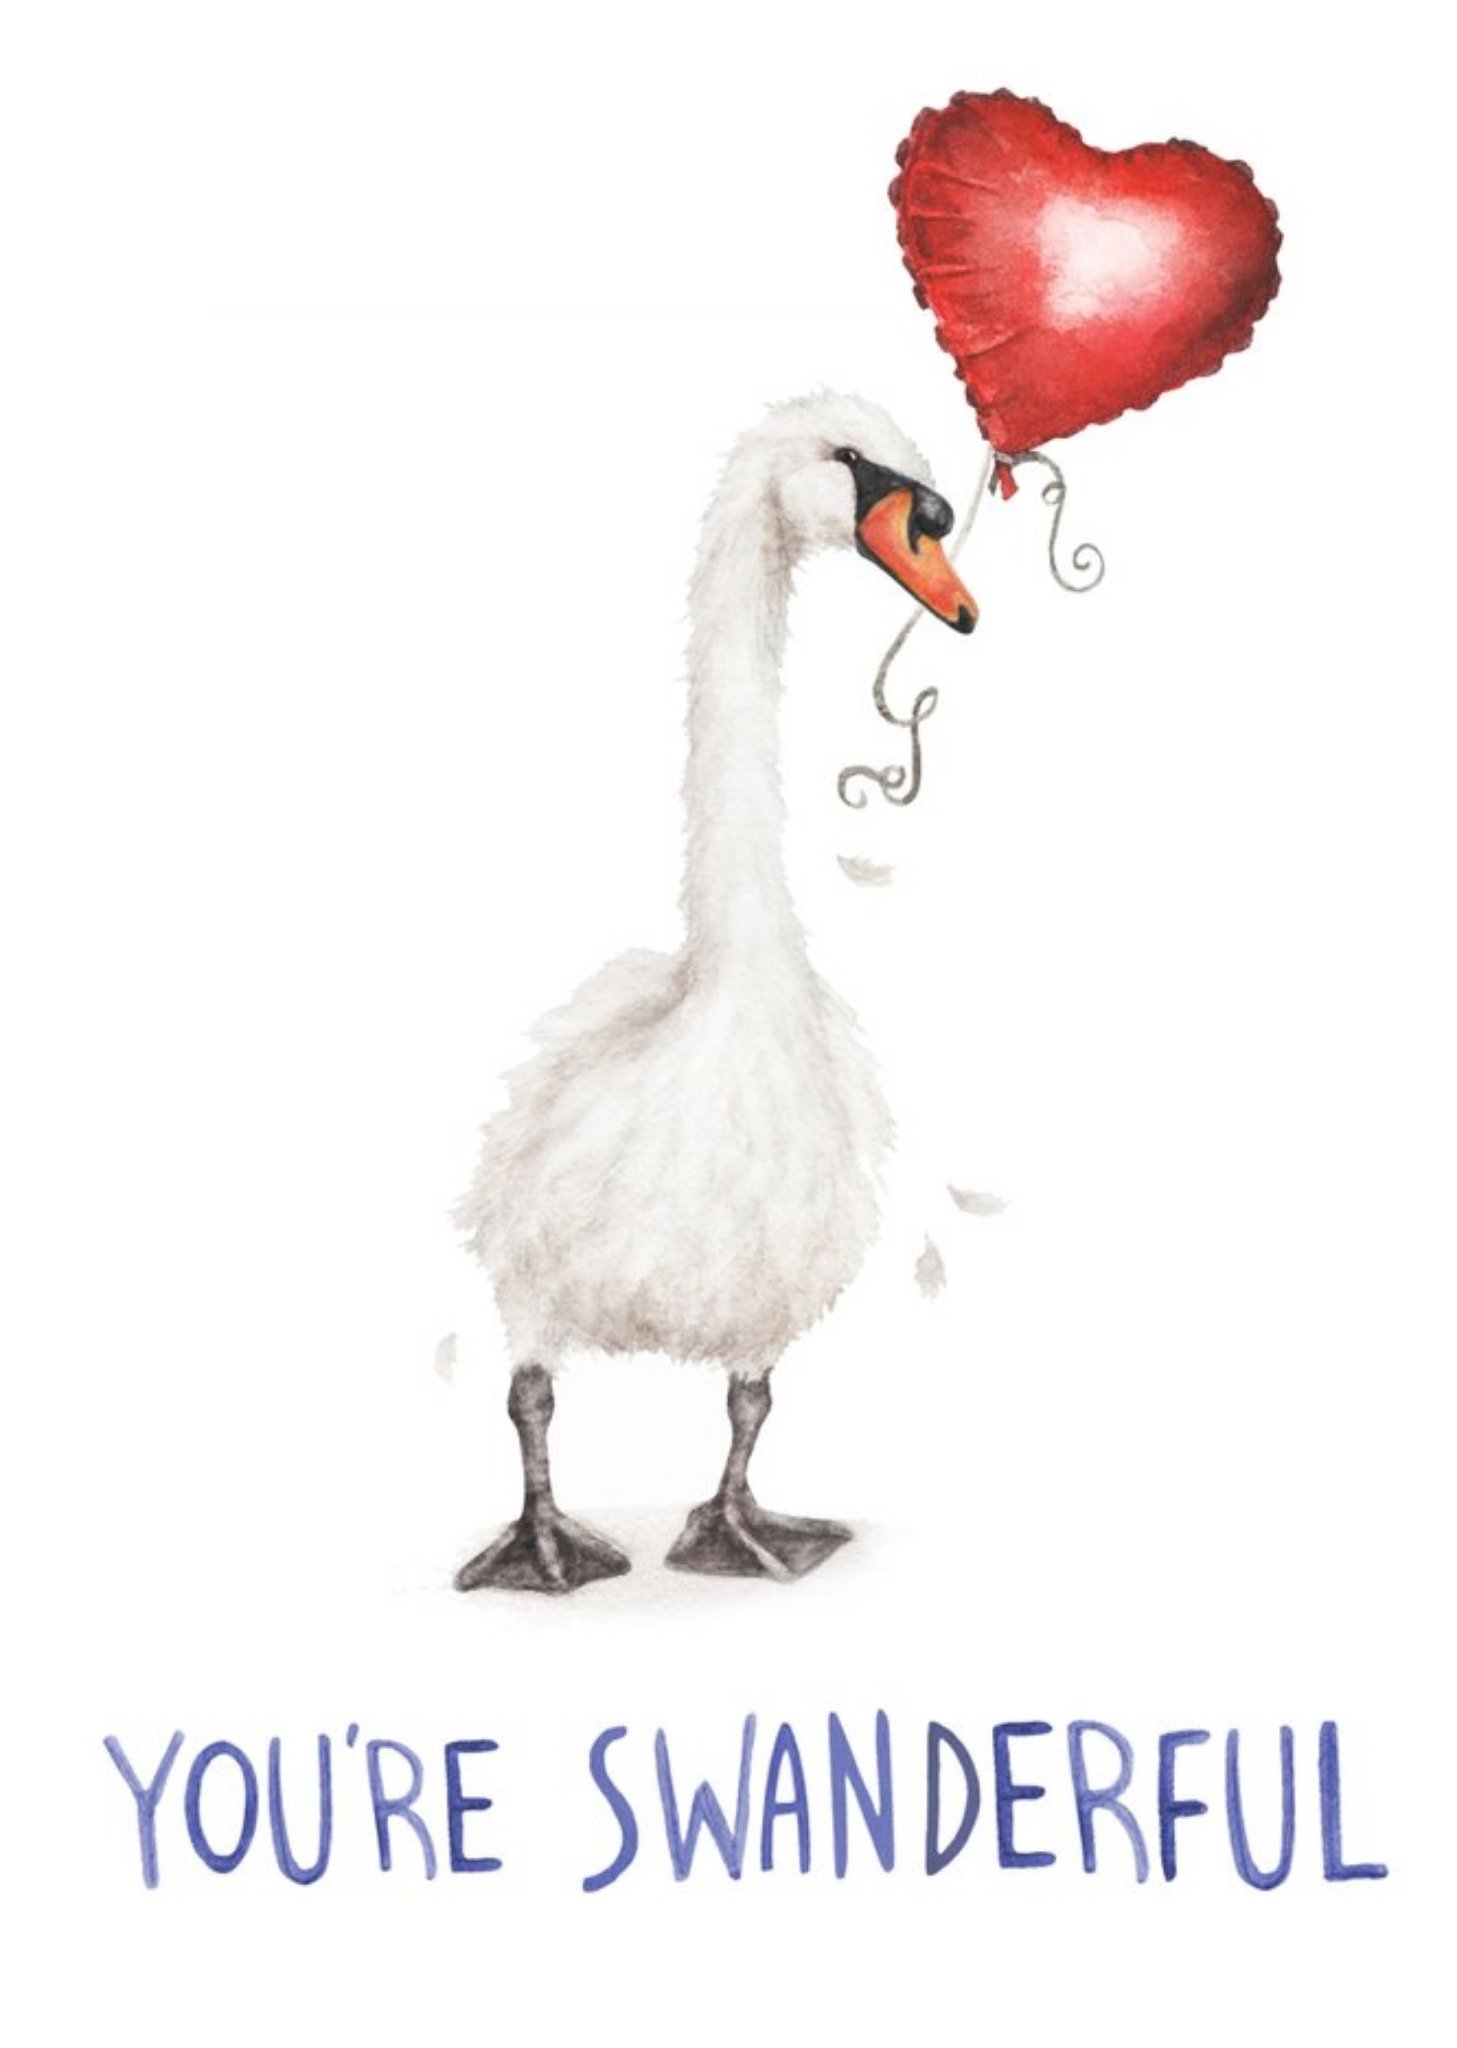 Moonpig Sweet Swan With A Heart Shaped Balloon Illustration Pun Card Ecard